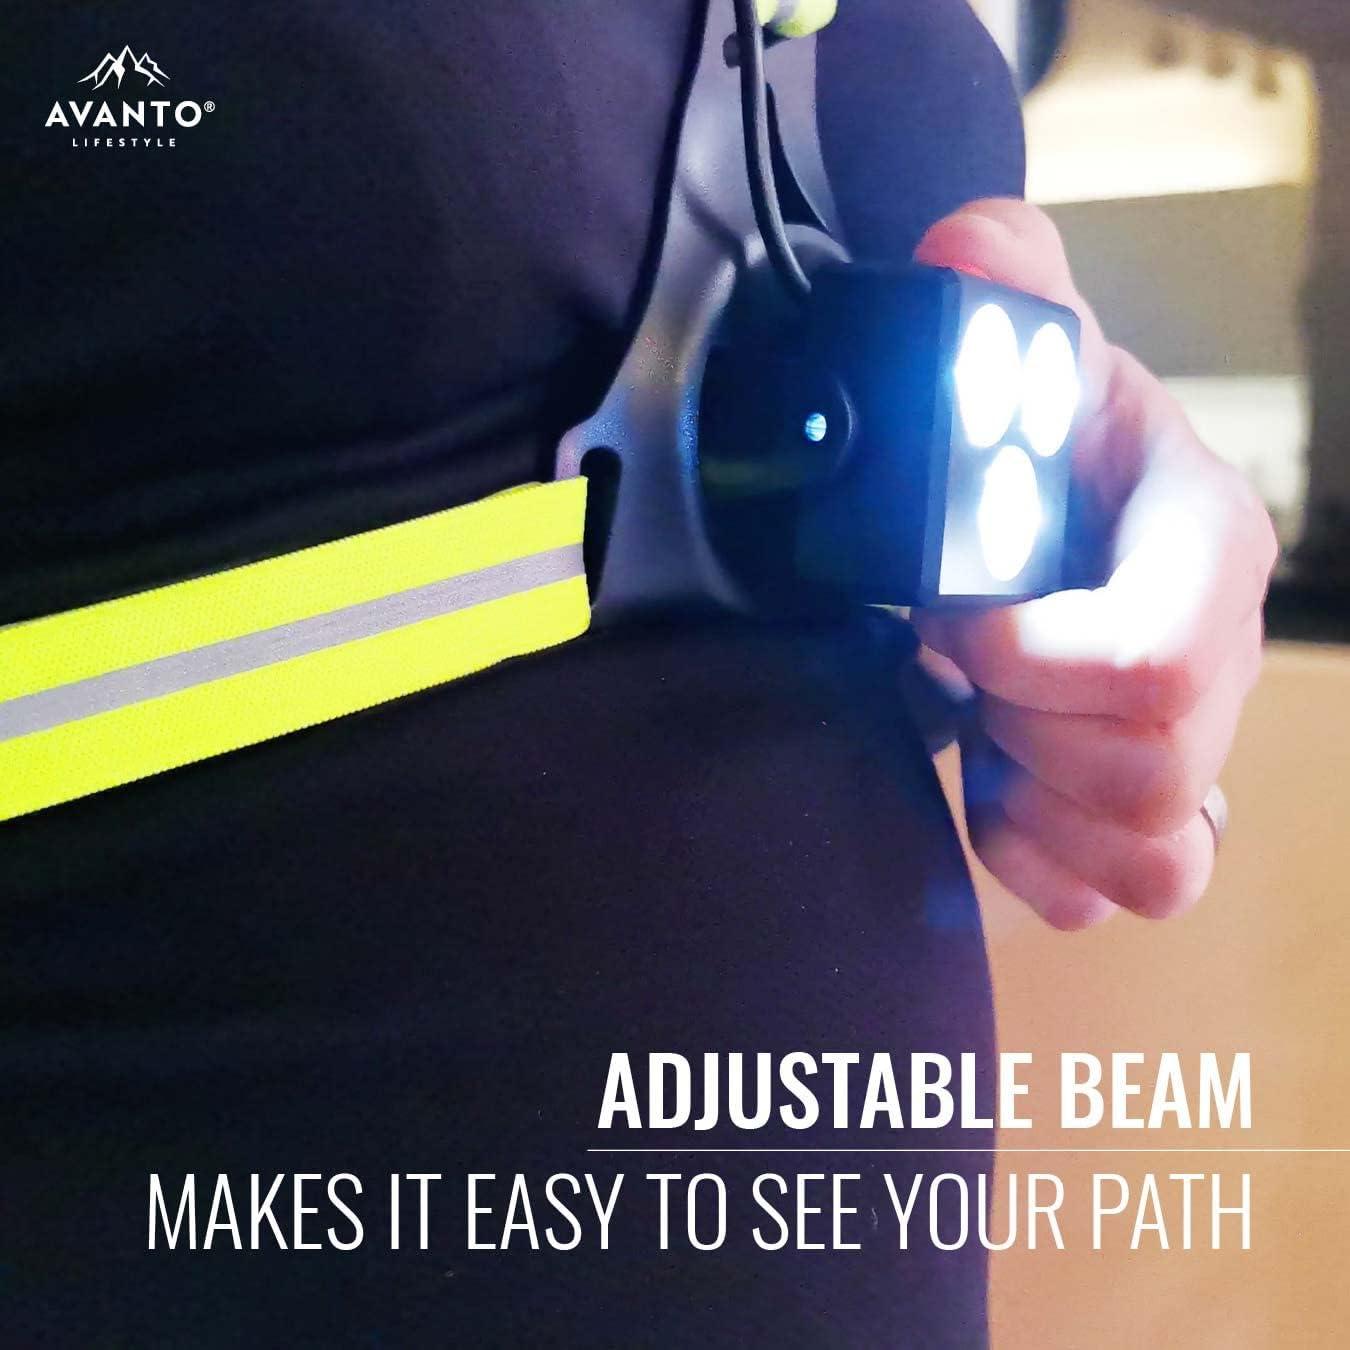  AVANTO Triple Beam Chest Lamp, Original, 500 Lumen LED Night  Running Lights for Runners, Dog Walking Light, Long 5-7h Usetime, USB-C  Rechargeable Battery, Running Headlamp, Reflective Vest, Yellow : Sports 